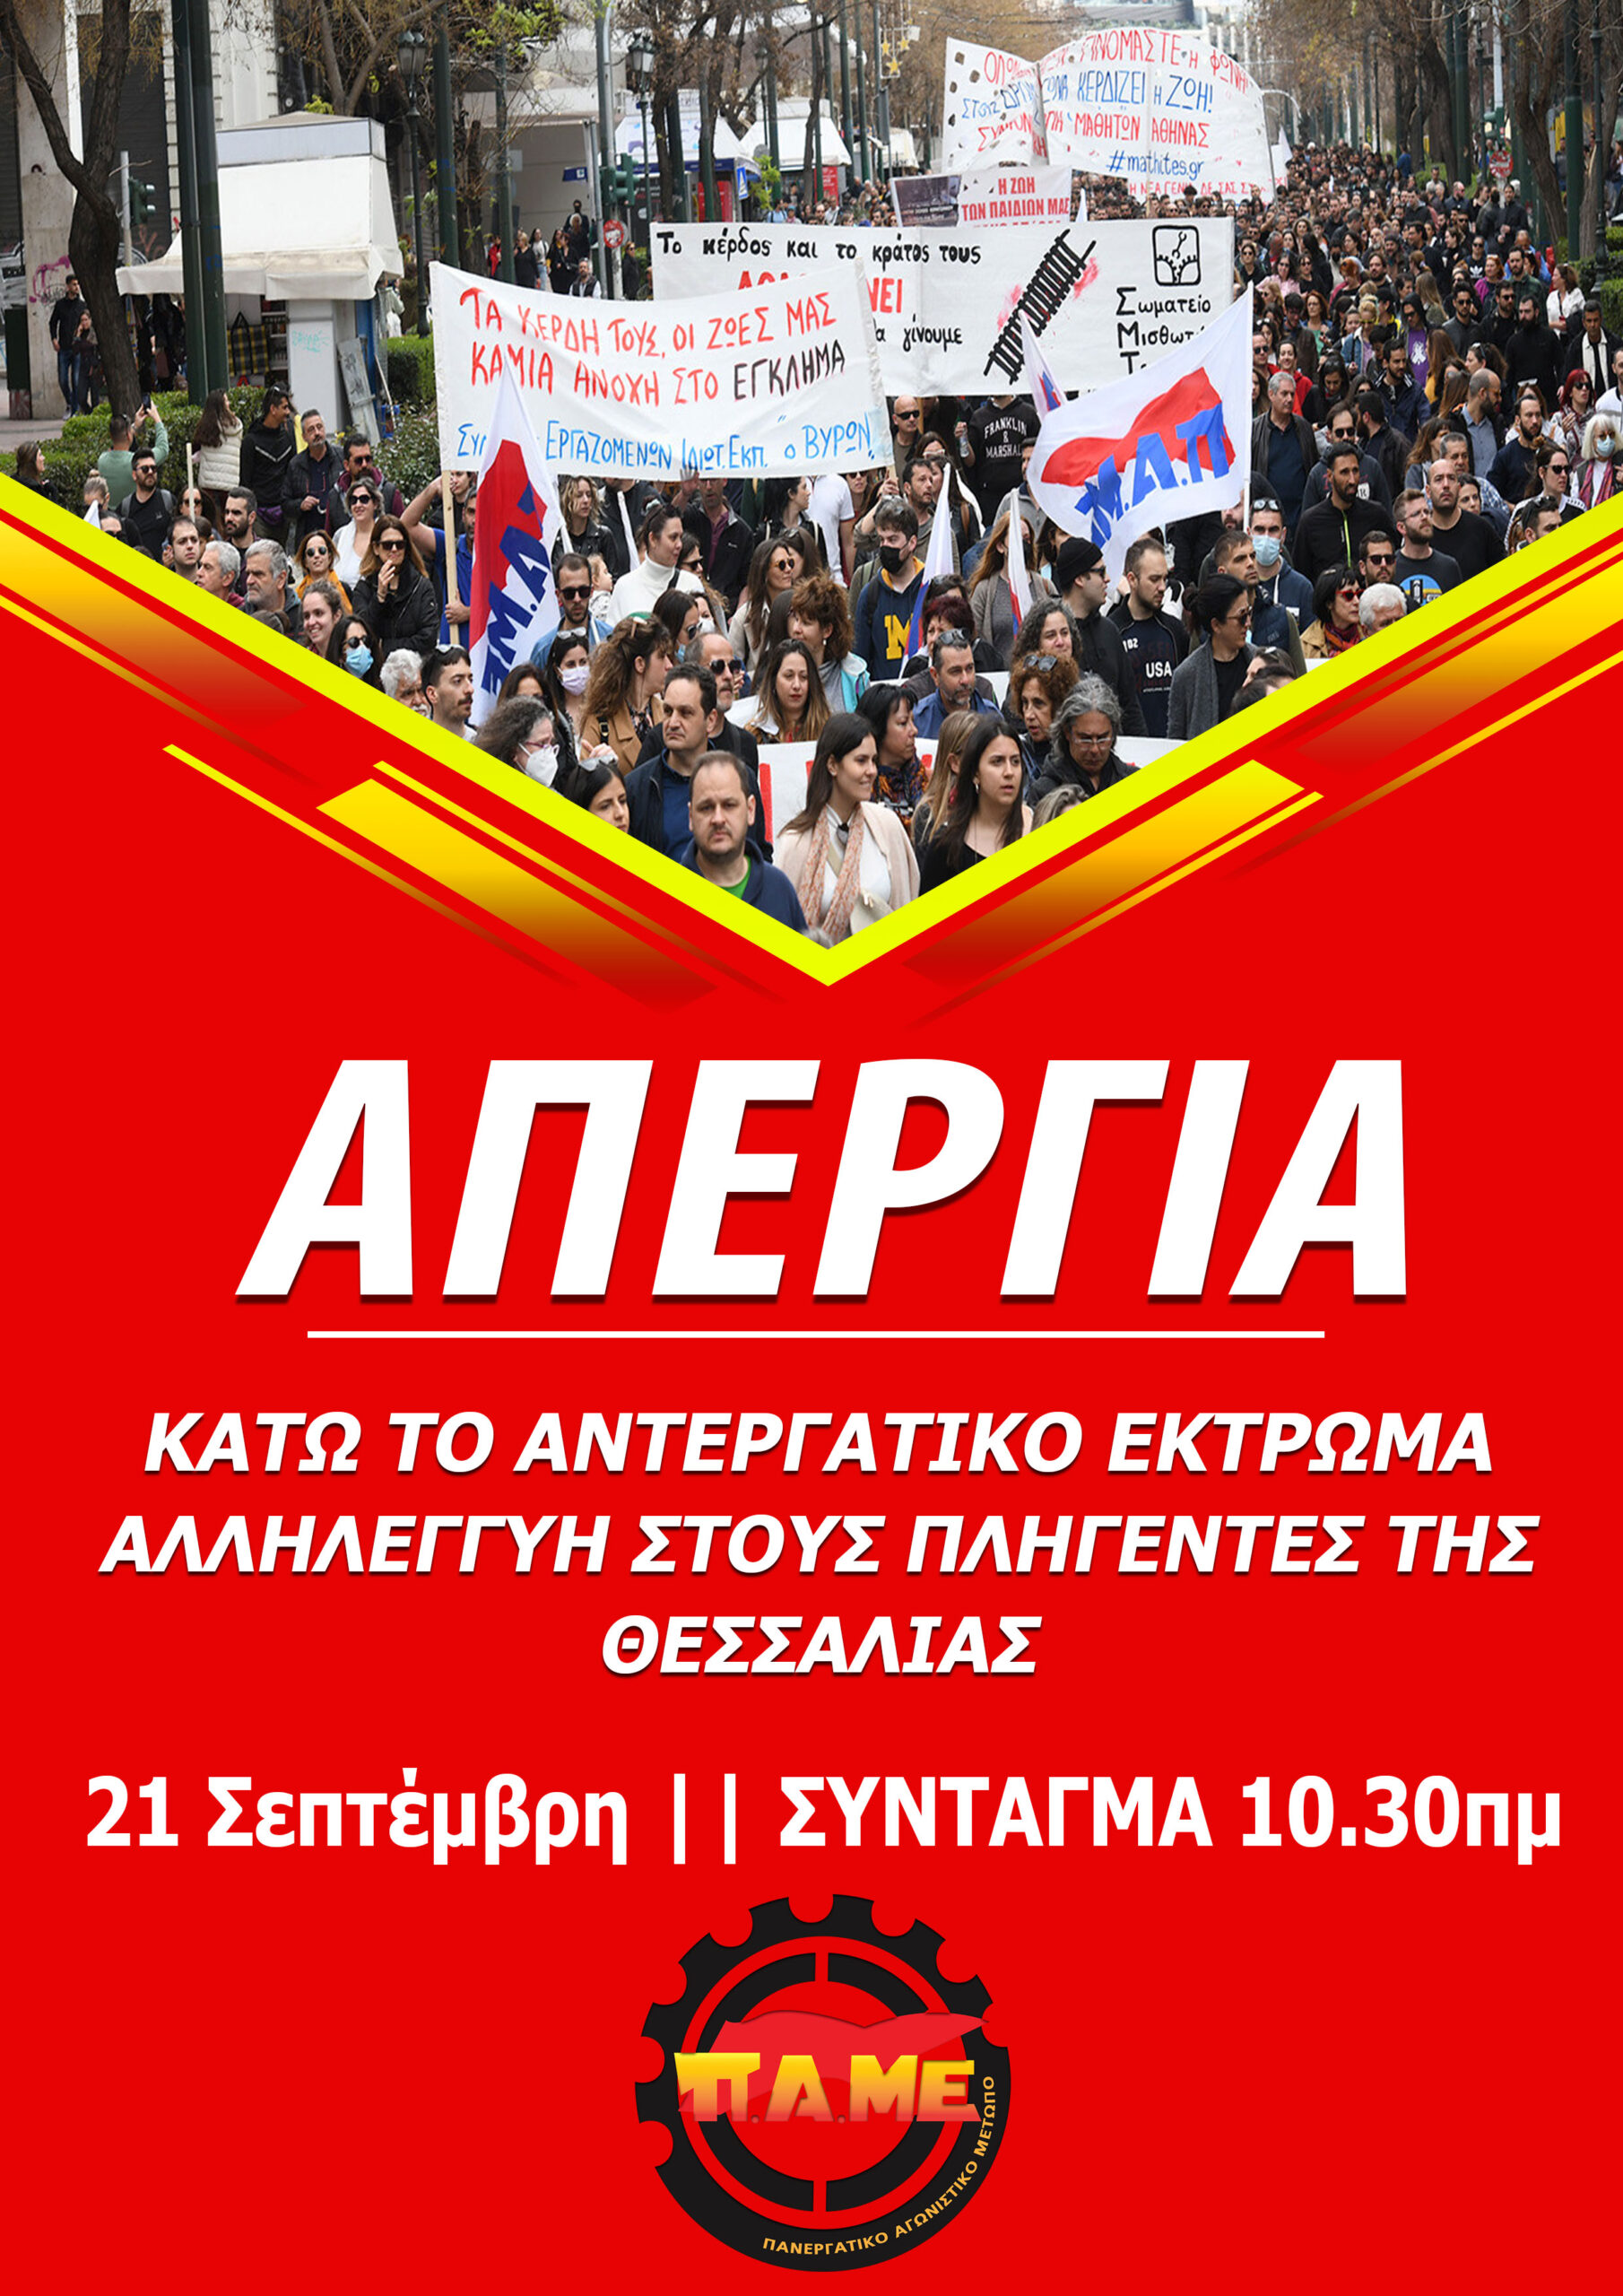 September 21 All Workers’ Strike in Greece